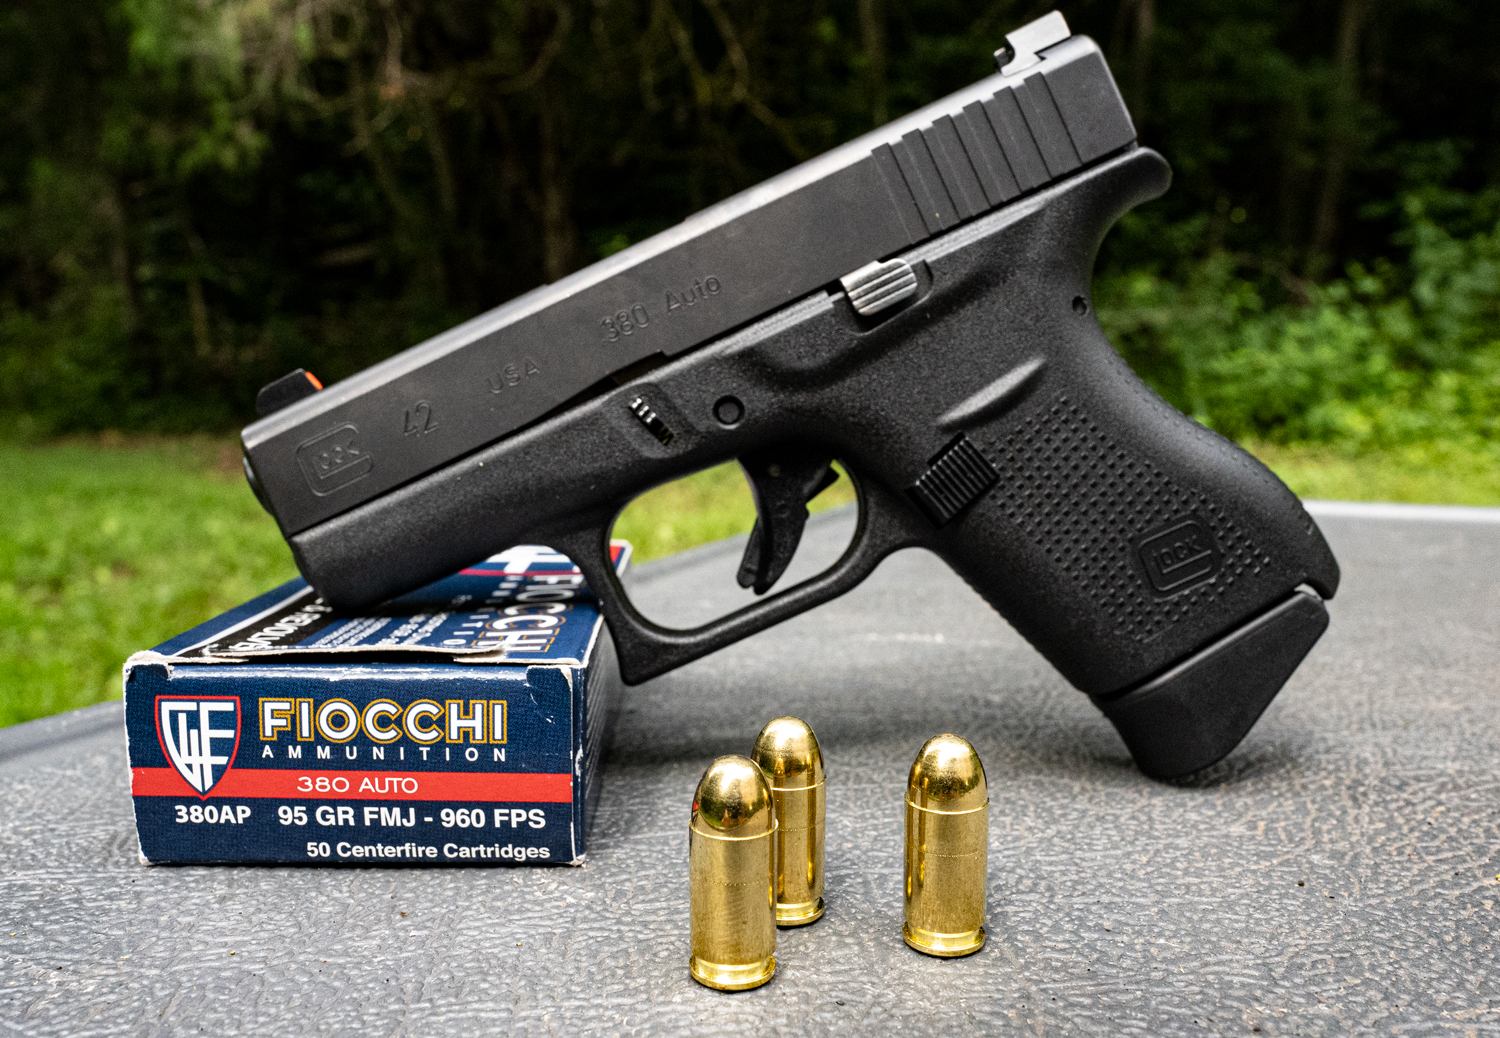 A Glock 380 Auto Pistol with Fiocchi ammo